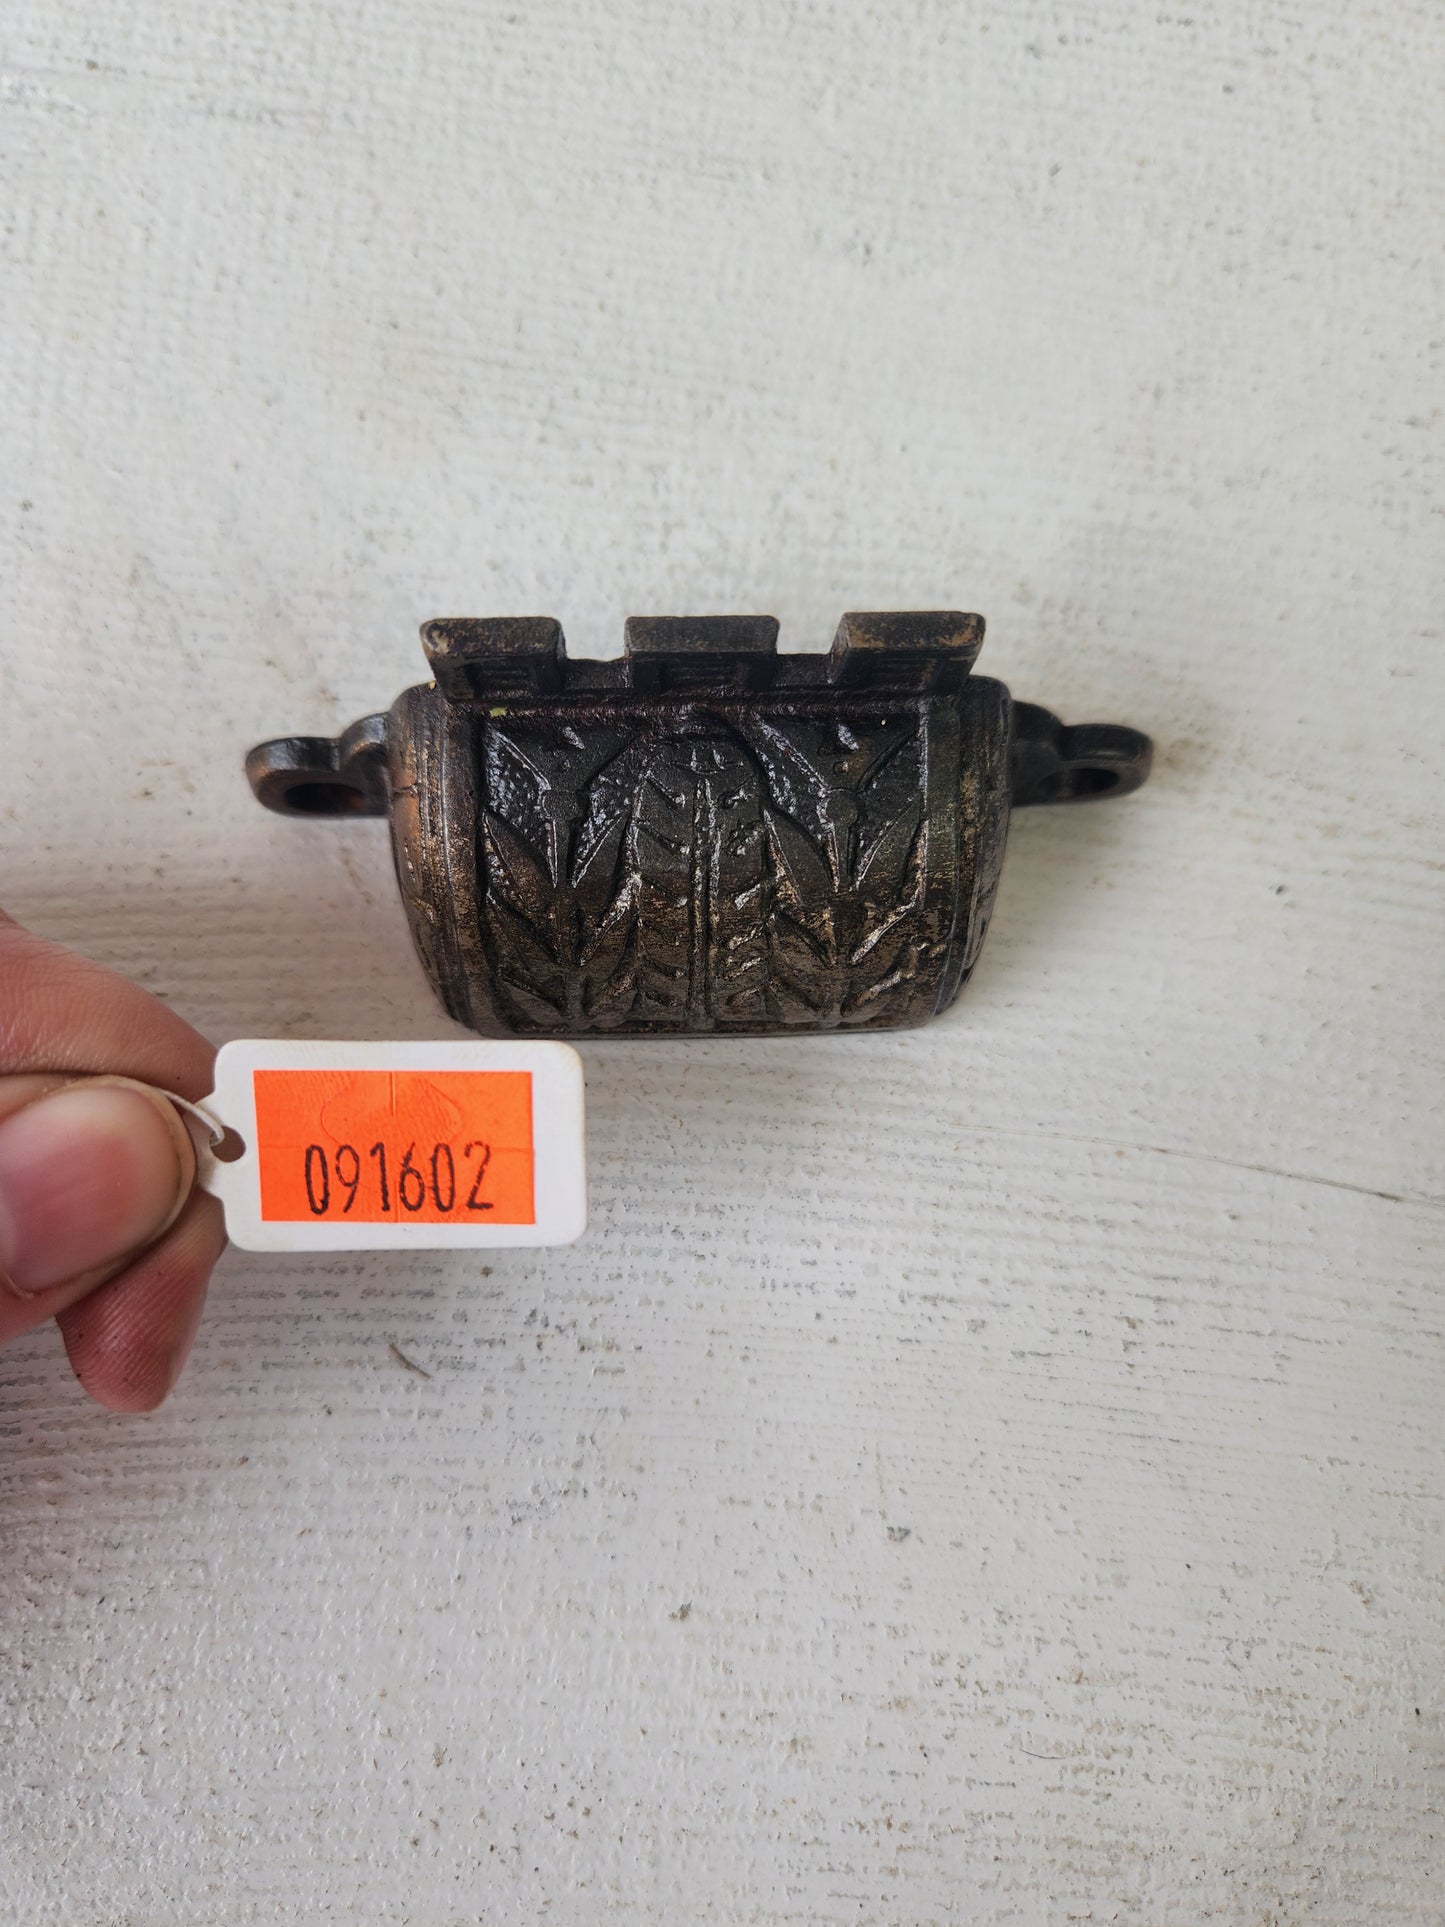 Pair of Antique Bin Pulls, Eastlake, Victorian Era Cast Iron Small Drawer Handle 091602